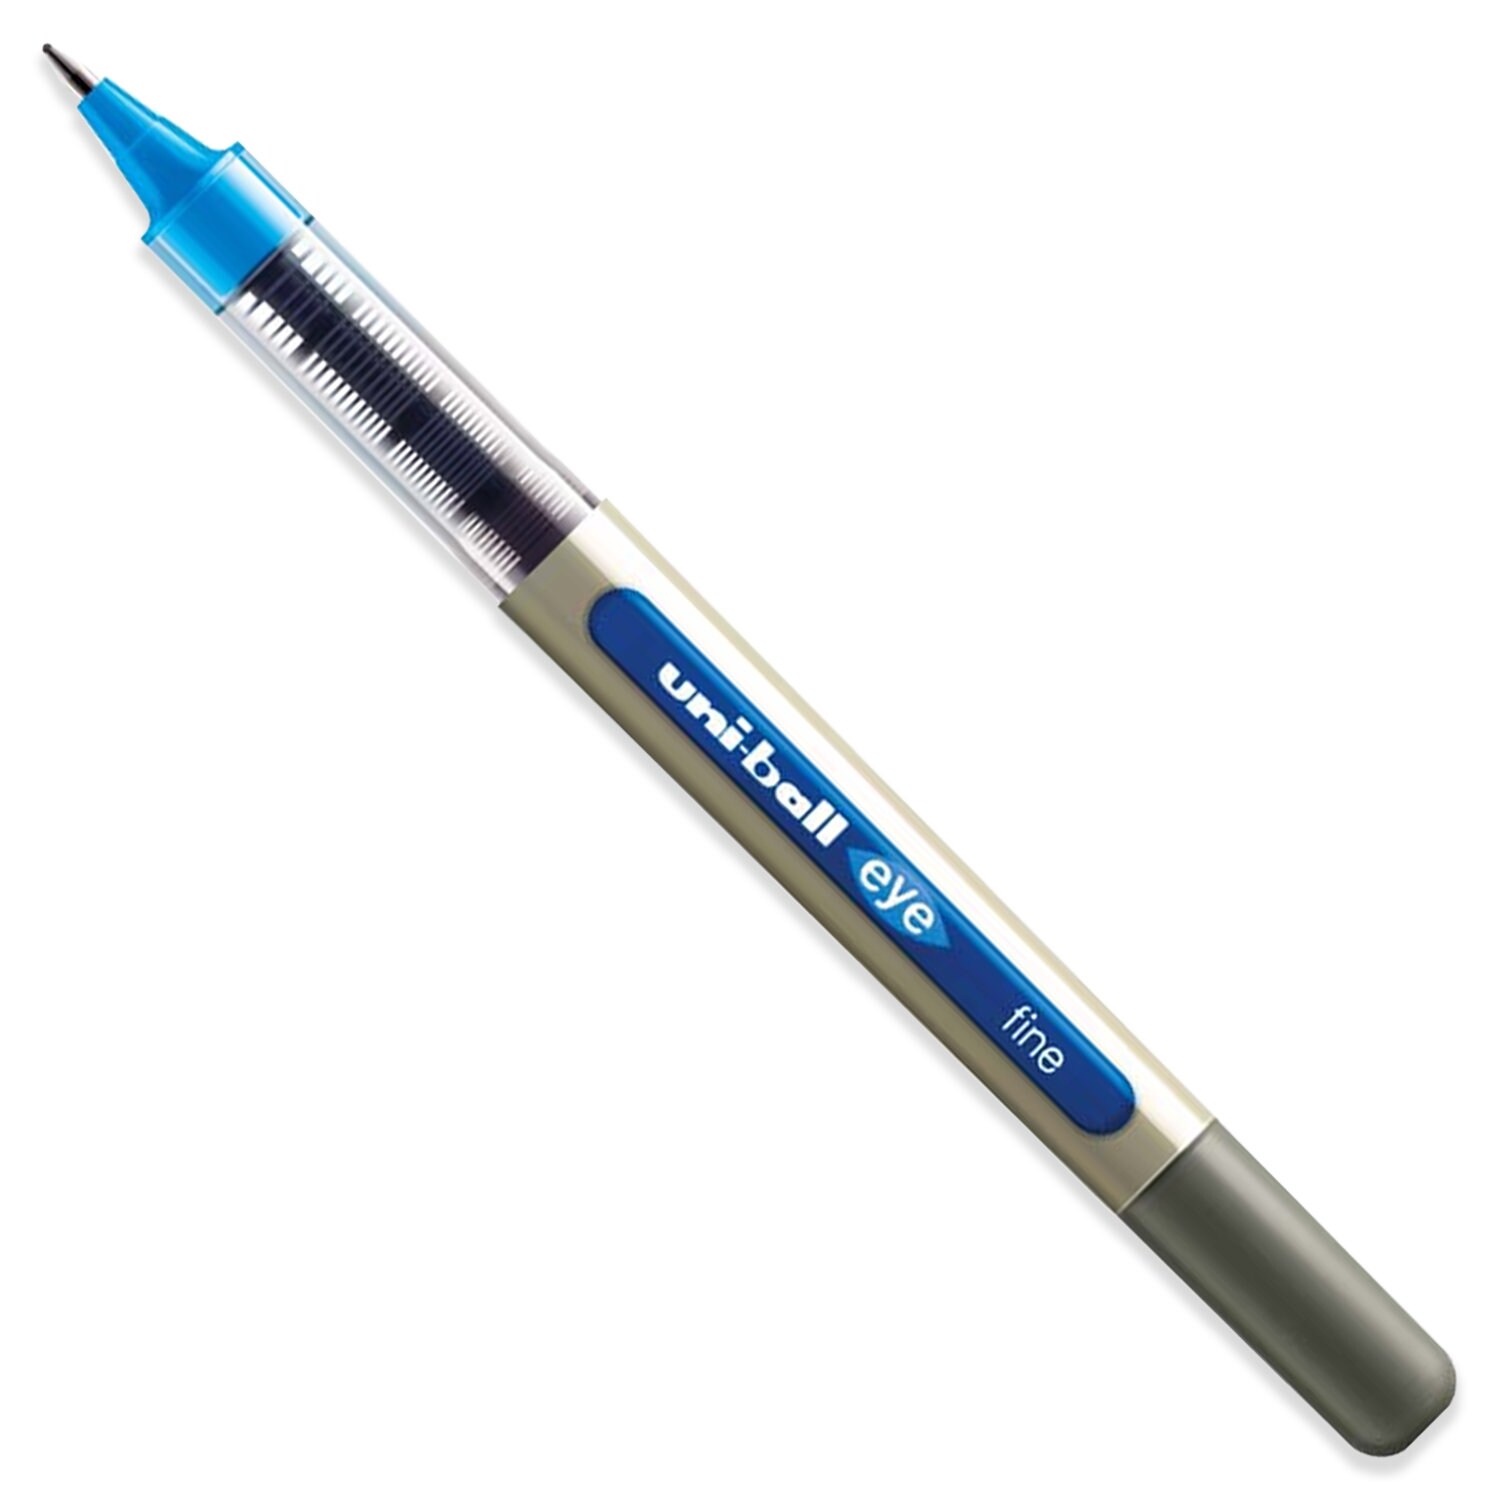 Uni-ball Eye UB 157 Roller Pen Wallet (Assorted Color, Pack of 8